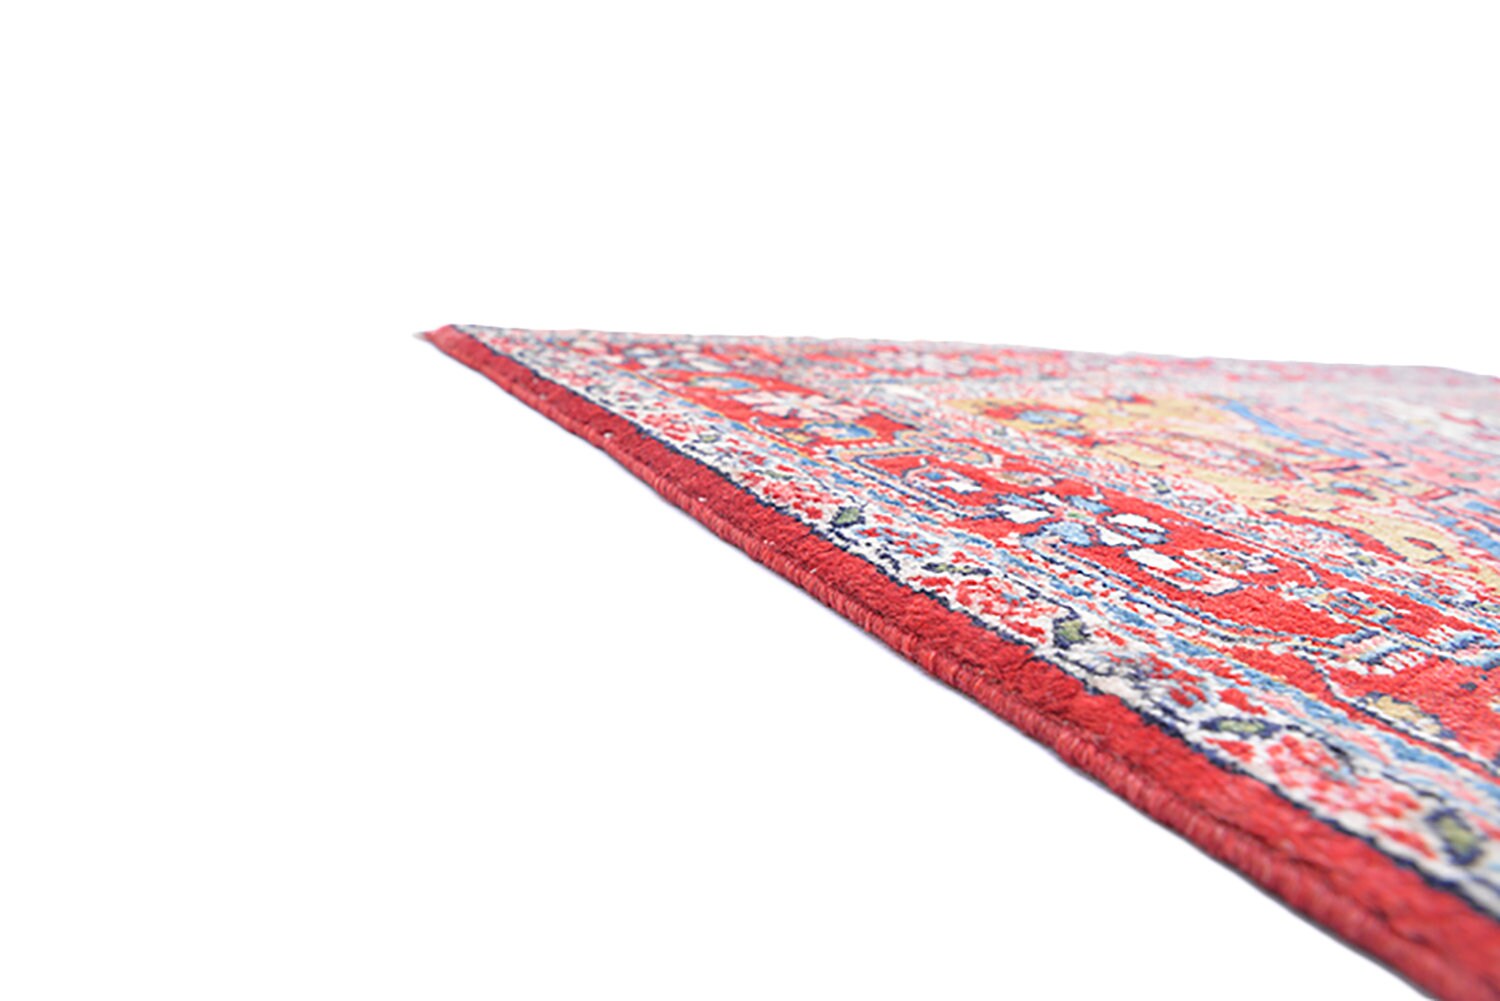 6.10 x 4.3 Feet | Vintage Pink Rug | Bright Medallion Rug | Floral Persian Design Rug | Pink Blue Yelllow Rug | Handwoven Wool Rug